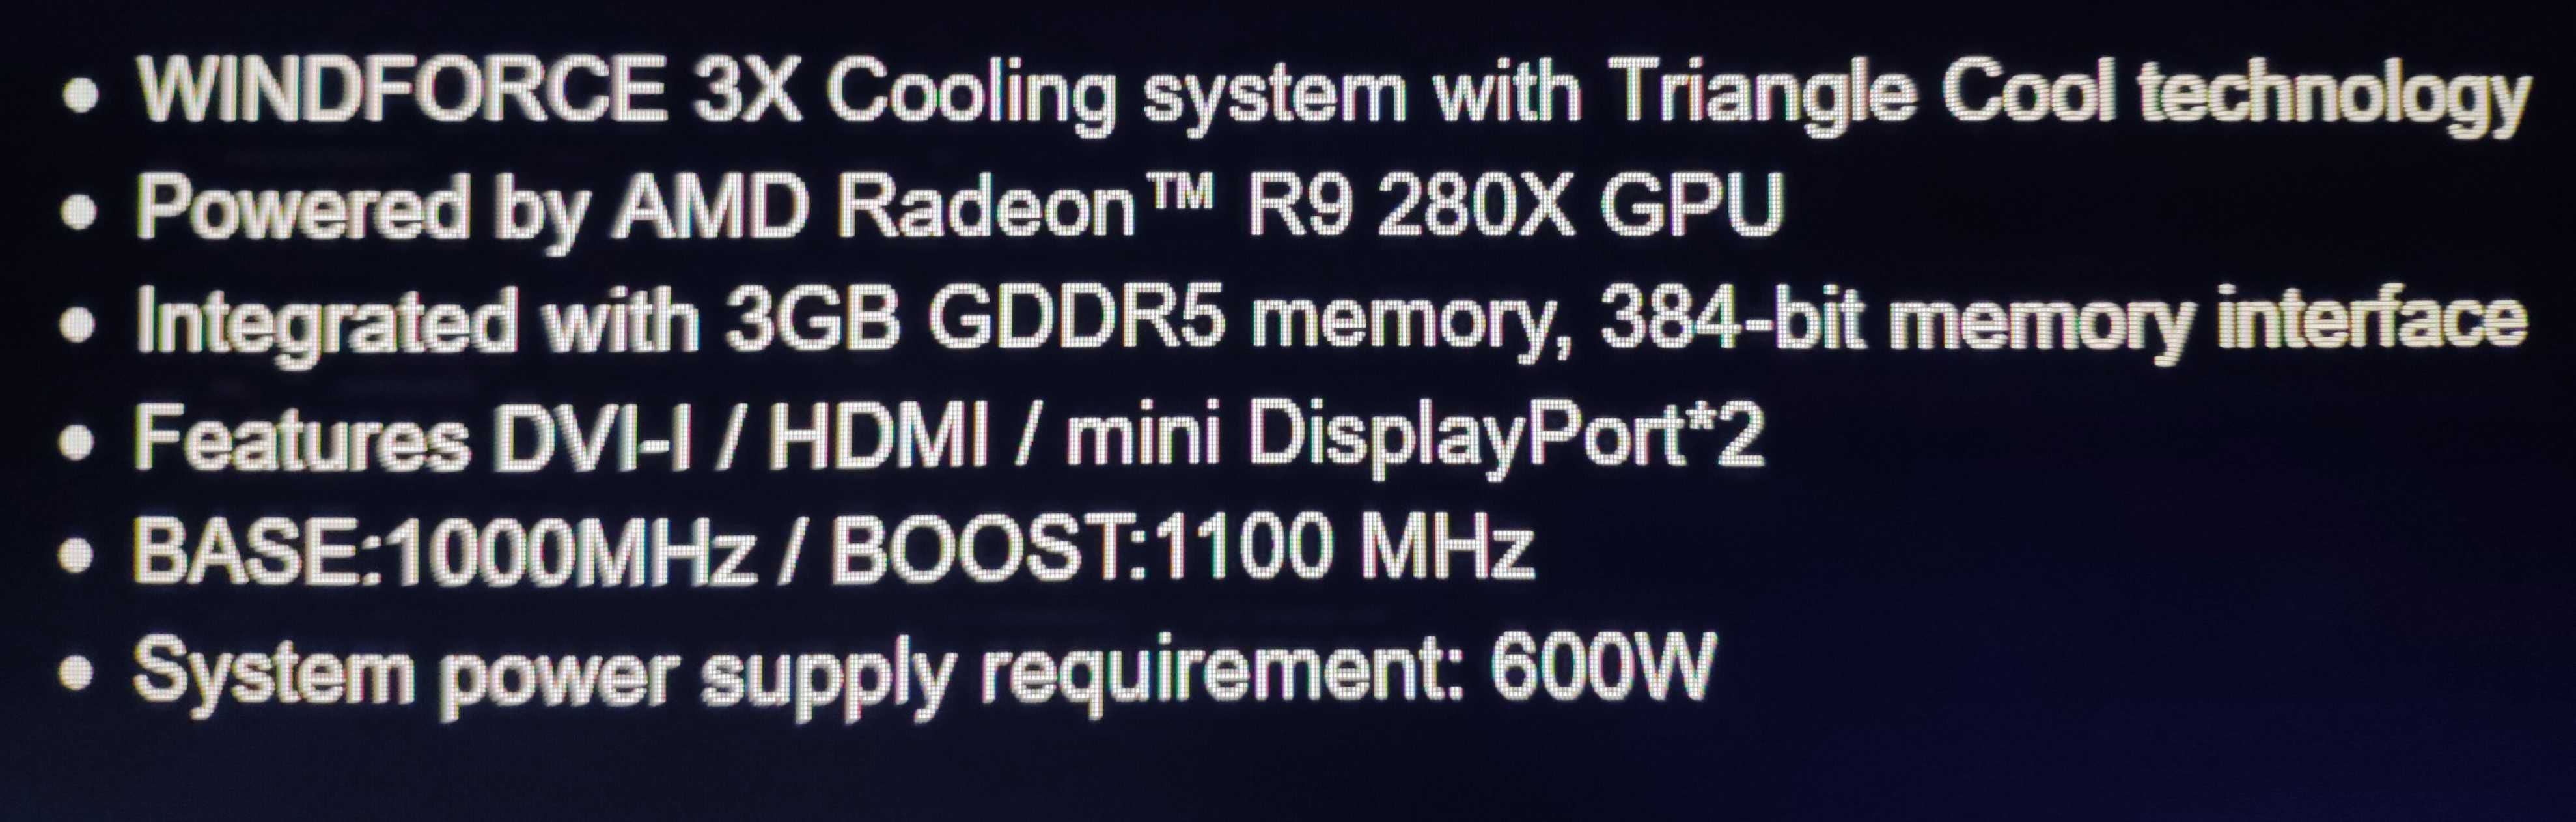 AMD Radeon R9 280x 3GB Windforce